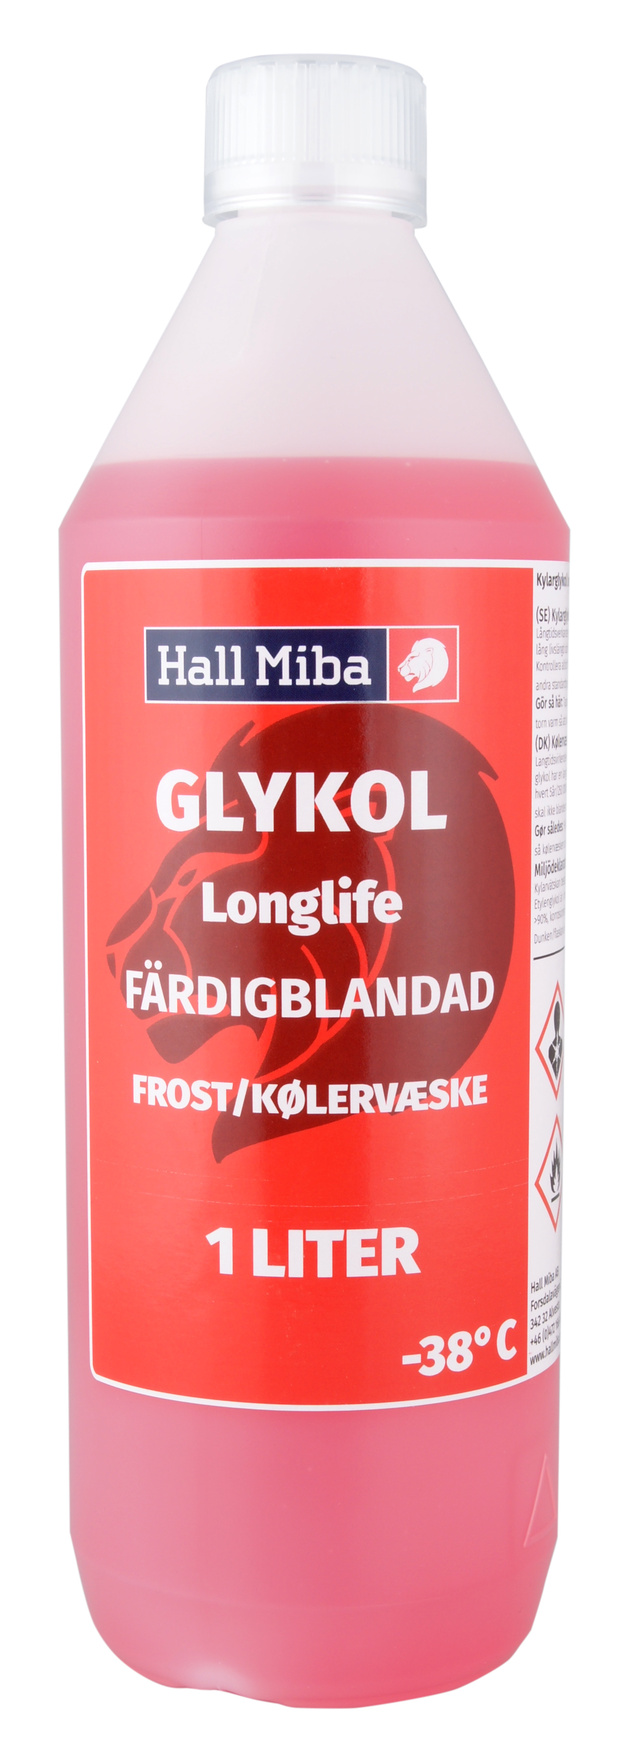 Glykol Longlife färdigblandad 1 lit